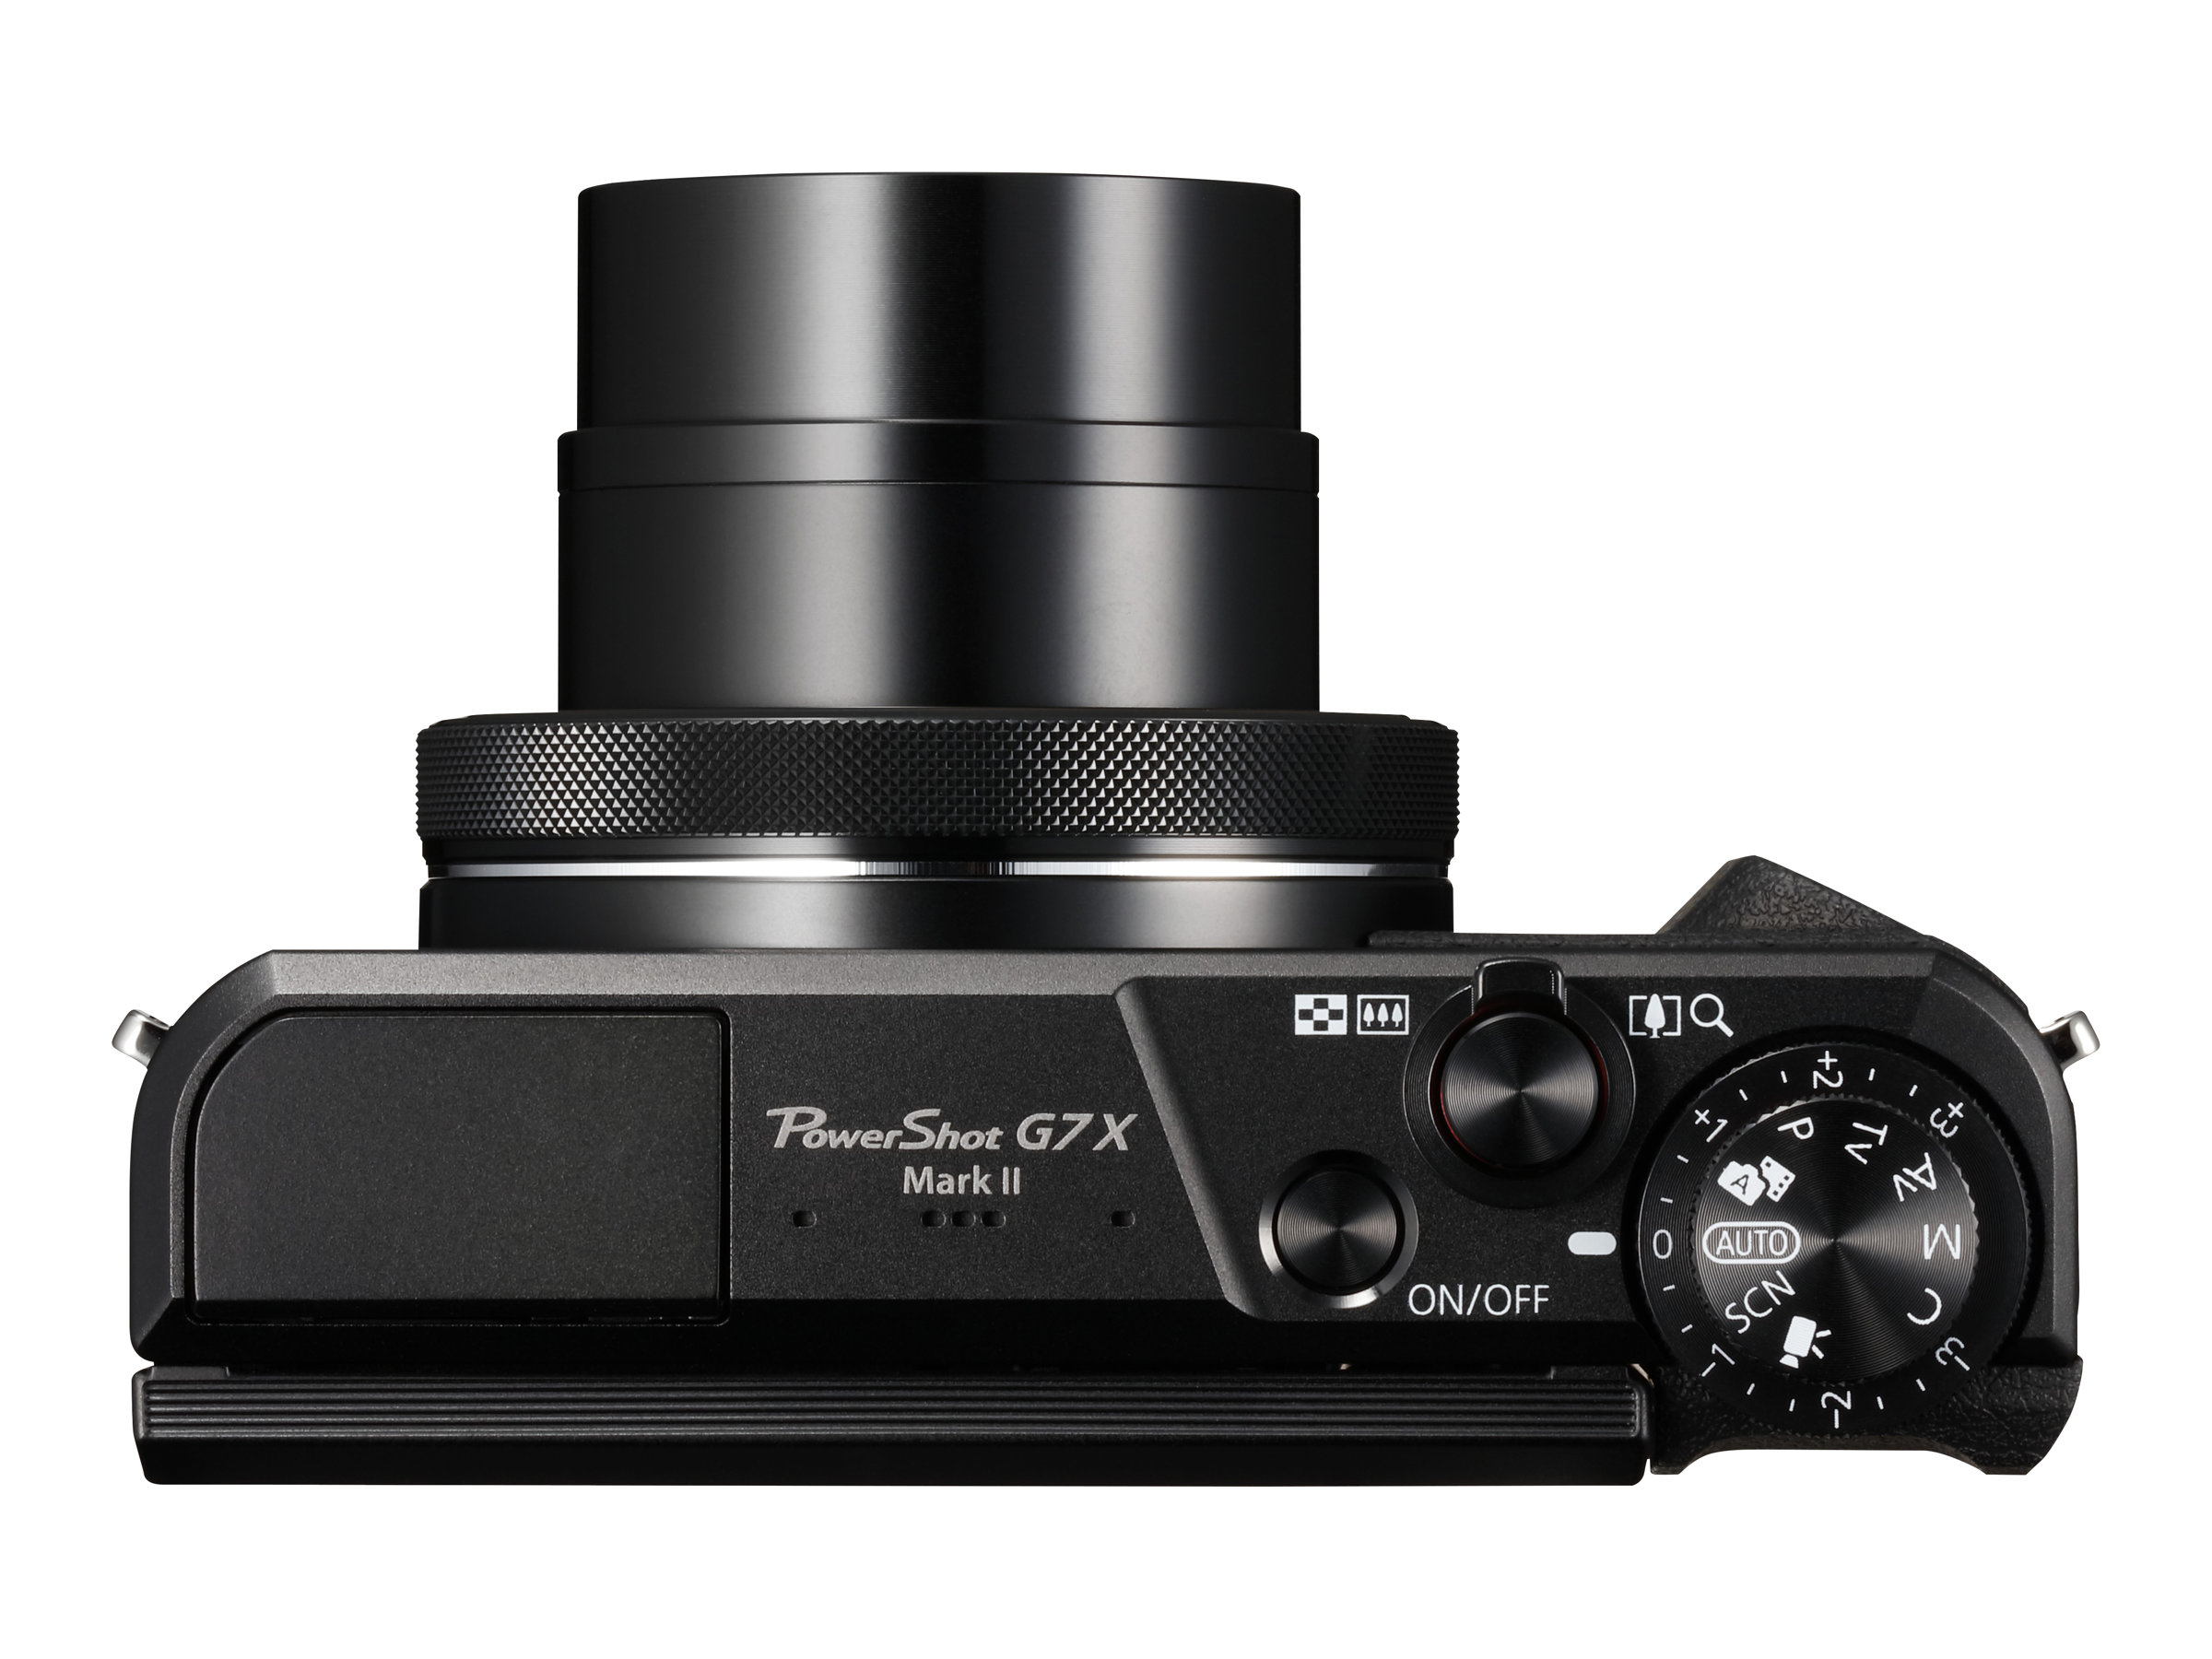 Canon PowerShot G7 X Mark II - Video Creator Kit - digital camera - compact - 20.1 MP - 1080p / 59.95 fps - 4.2x optical zoom - Wi-Fi, NFC - image 5 of 9